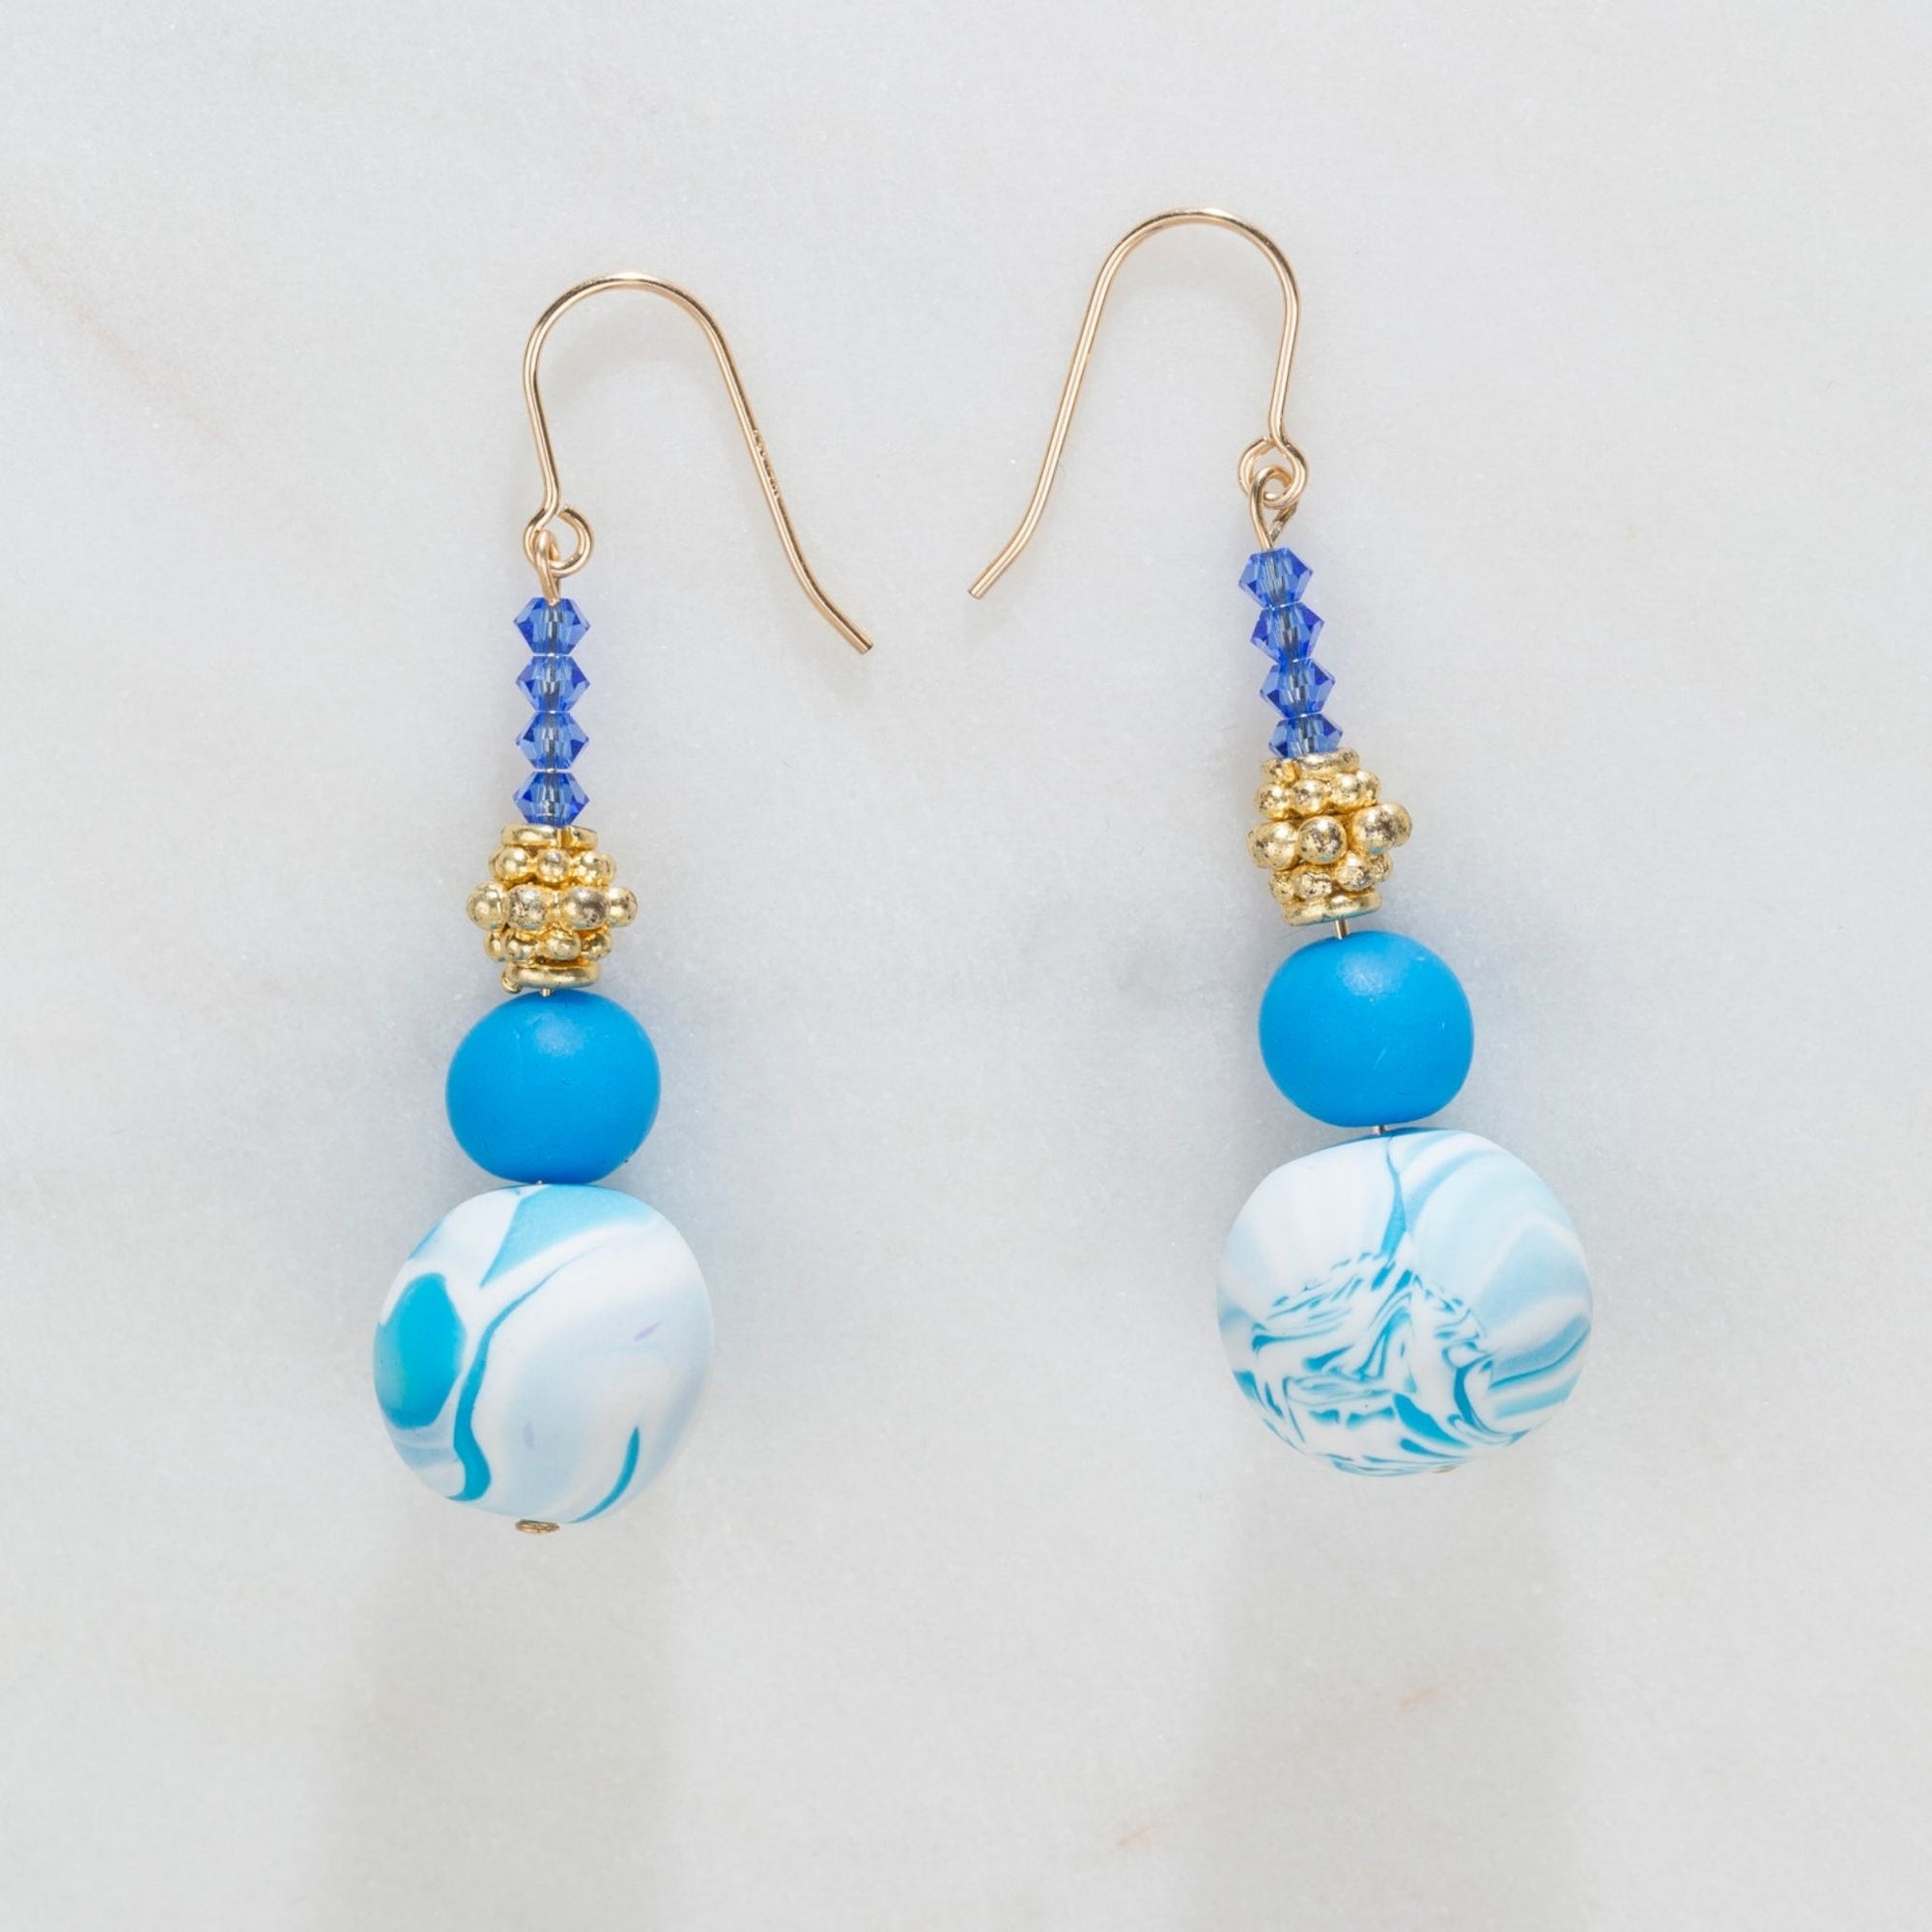 Handmade Earrings | Handcrafted Beads | Swarovski Crystals Beads | 14kt Gold filled hoops ER107